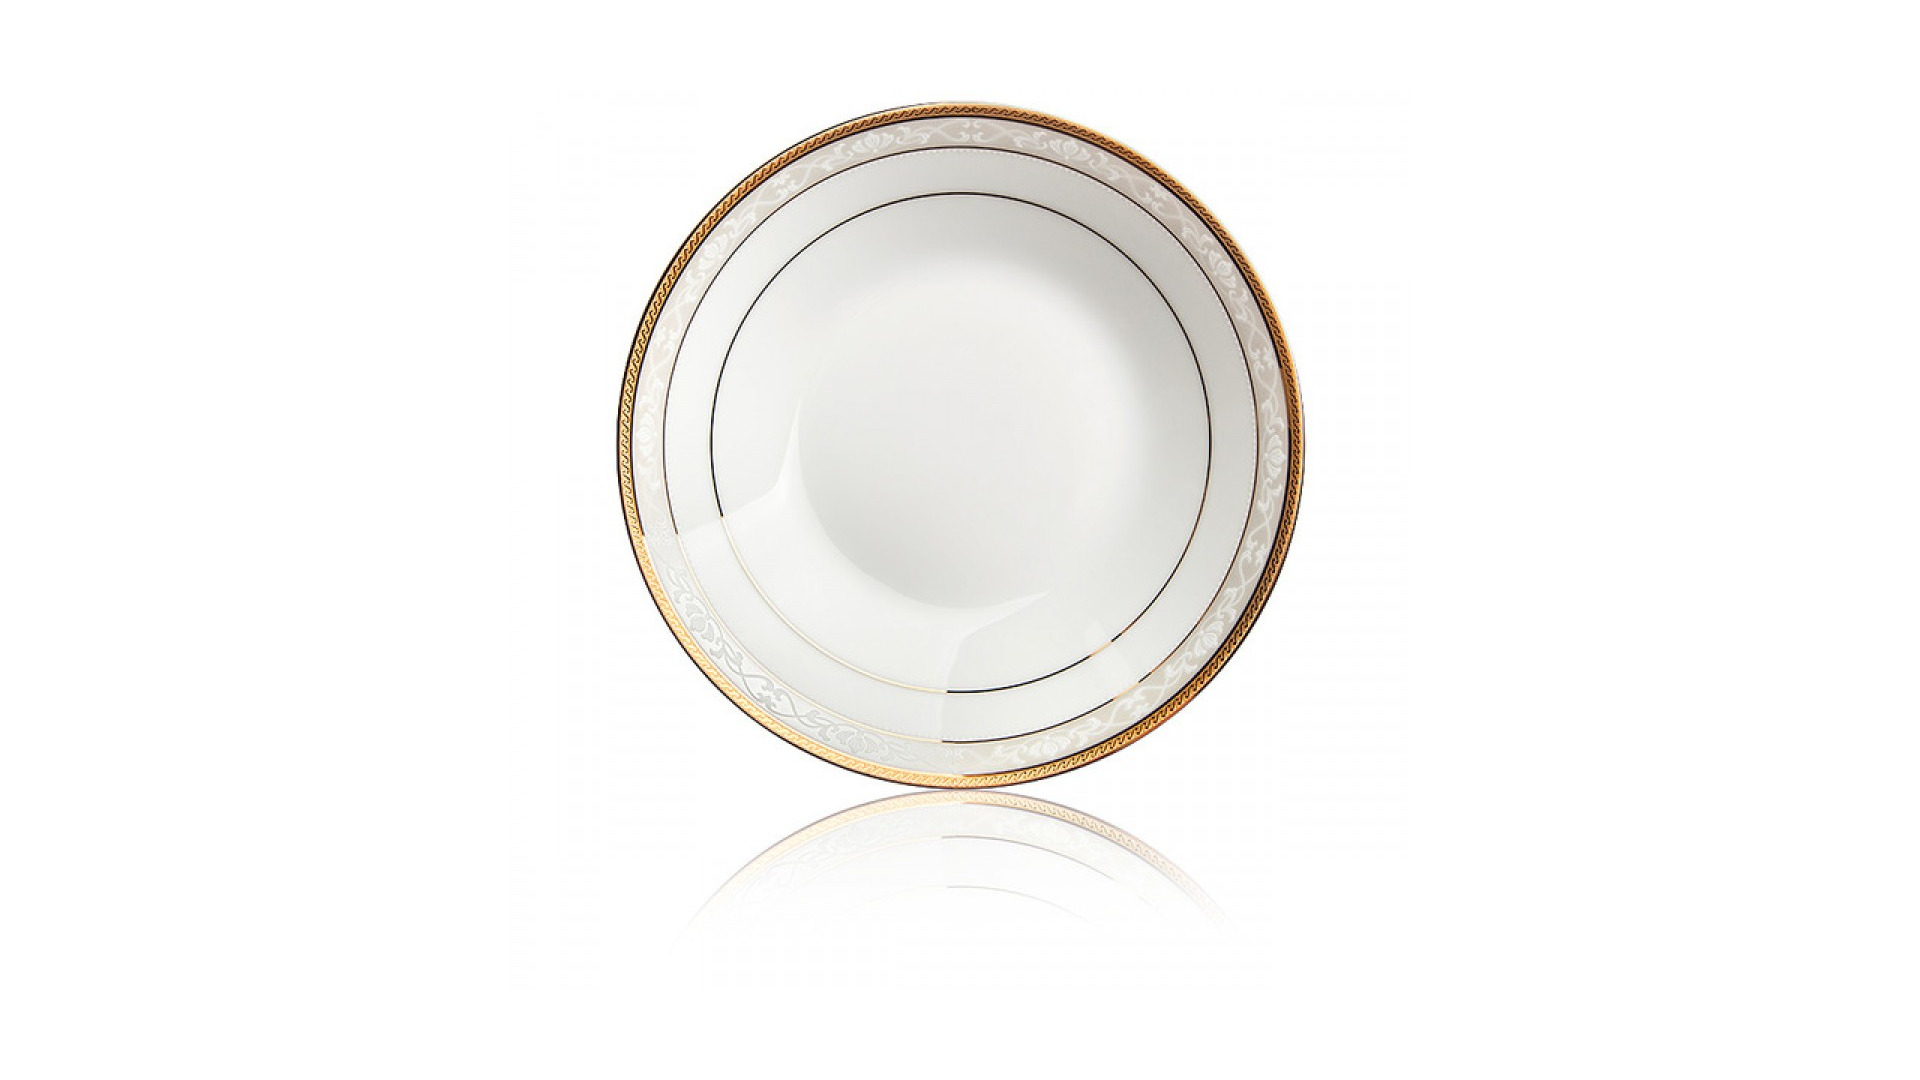 Набор тарелок суповых Noritake Хэмпшир, золотой кант 23 см, 6 шт